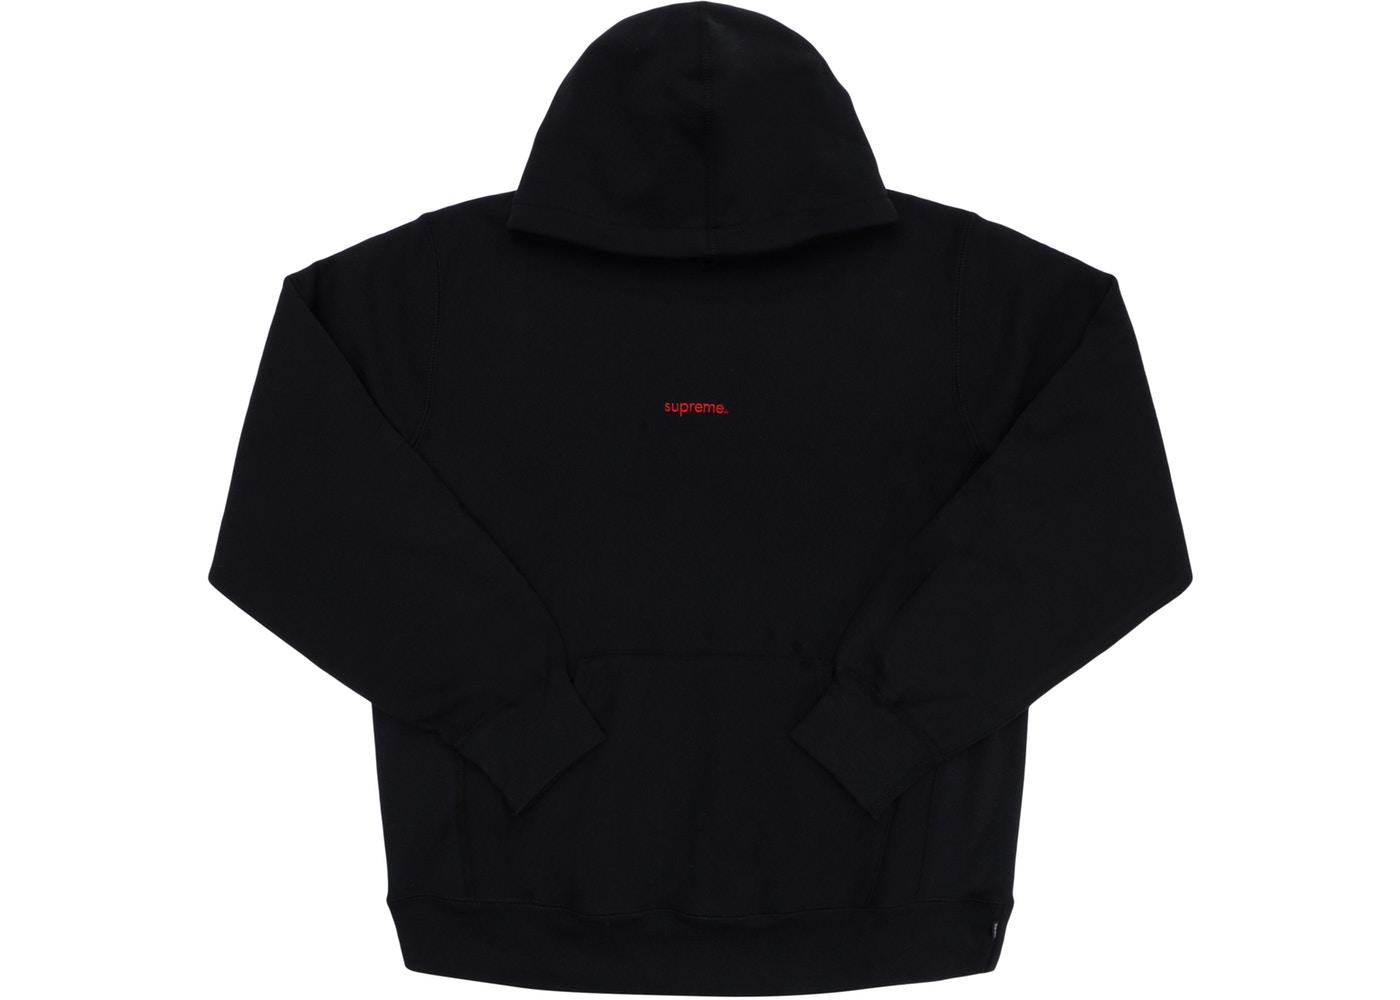 Supreme Trademark Hooded Sweatshirt Black - StockX News